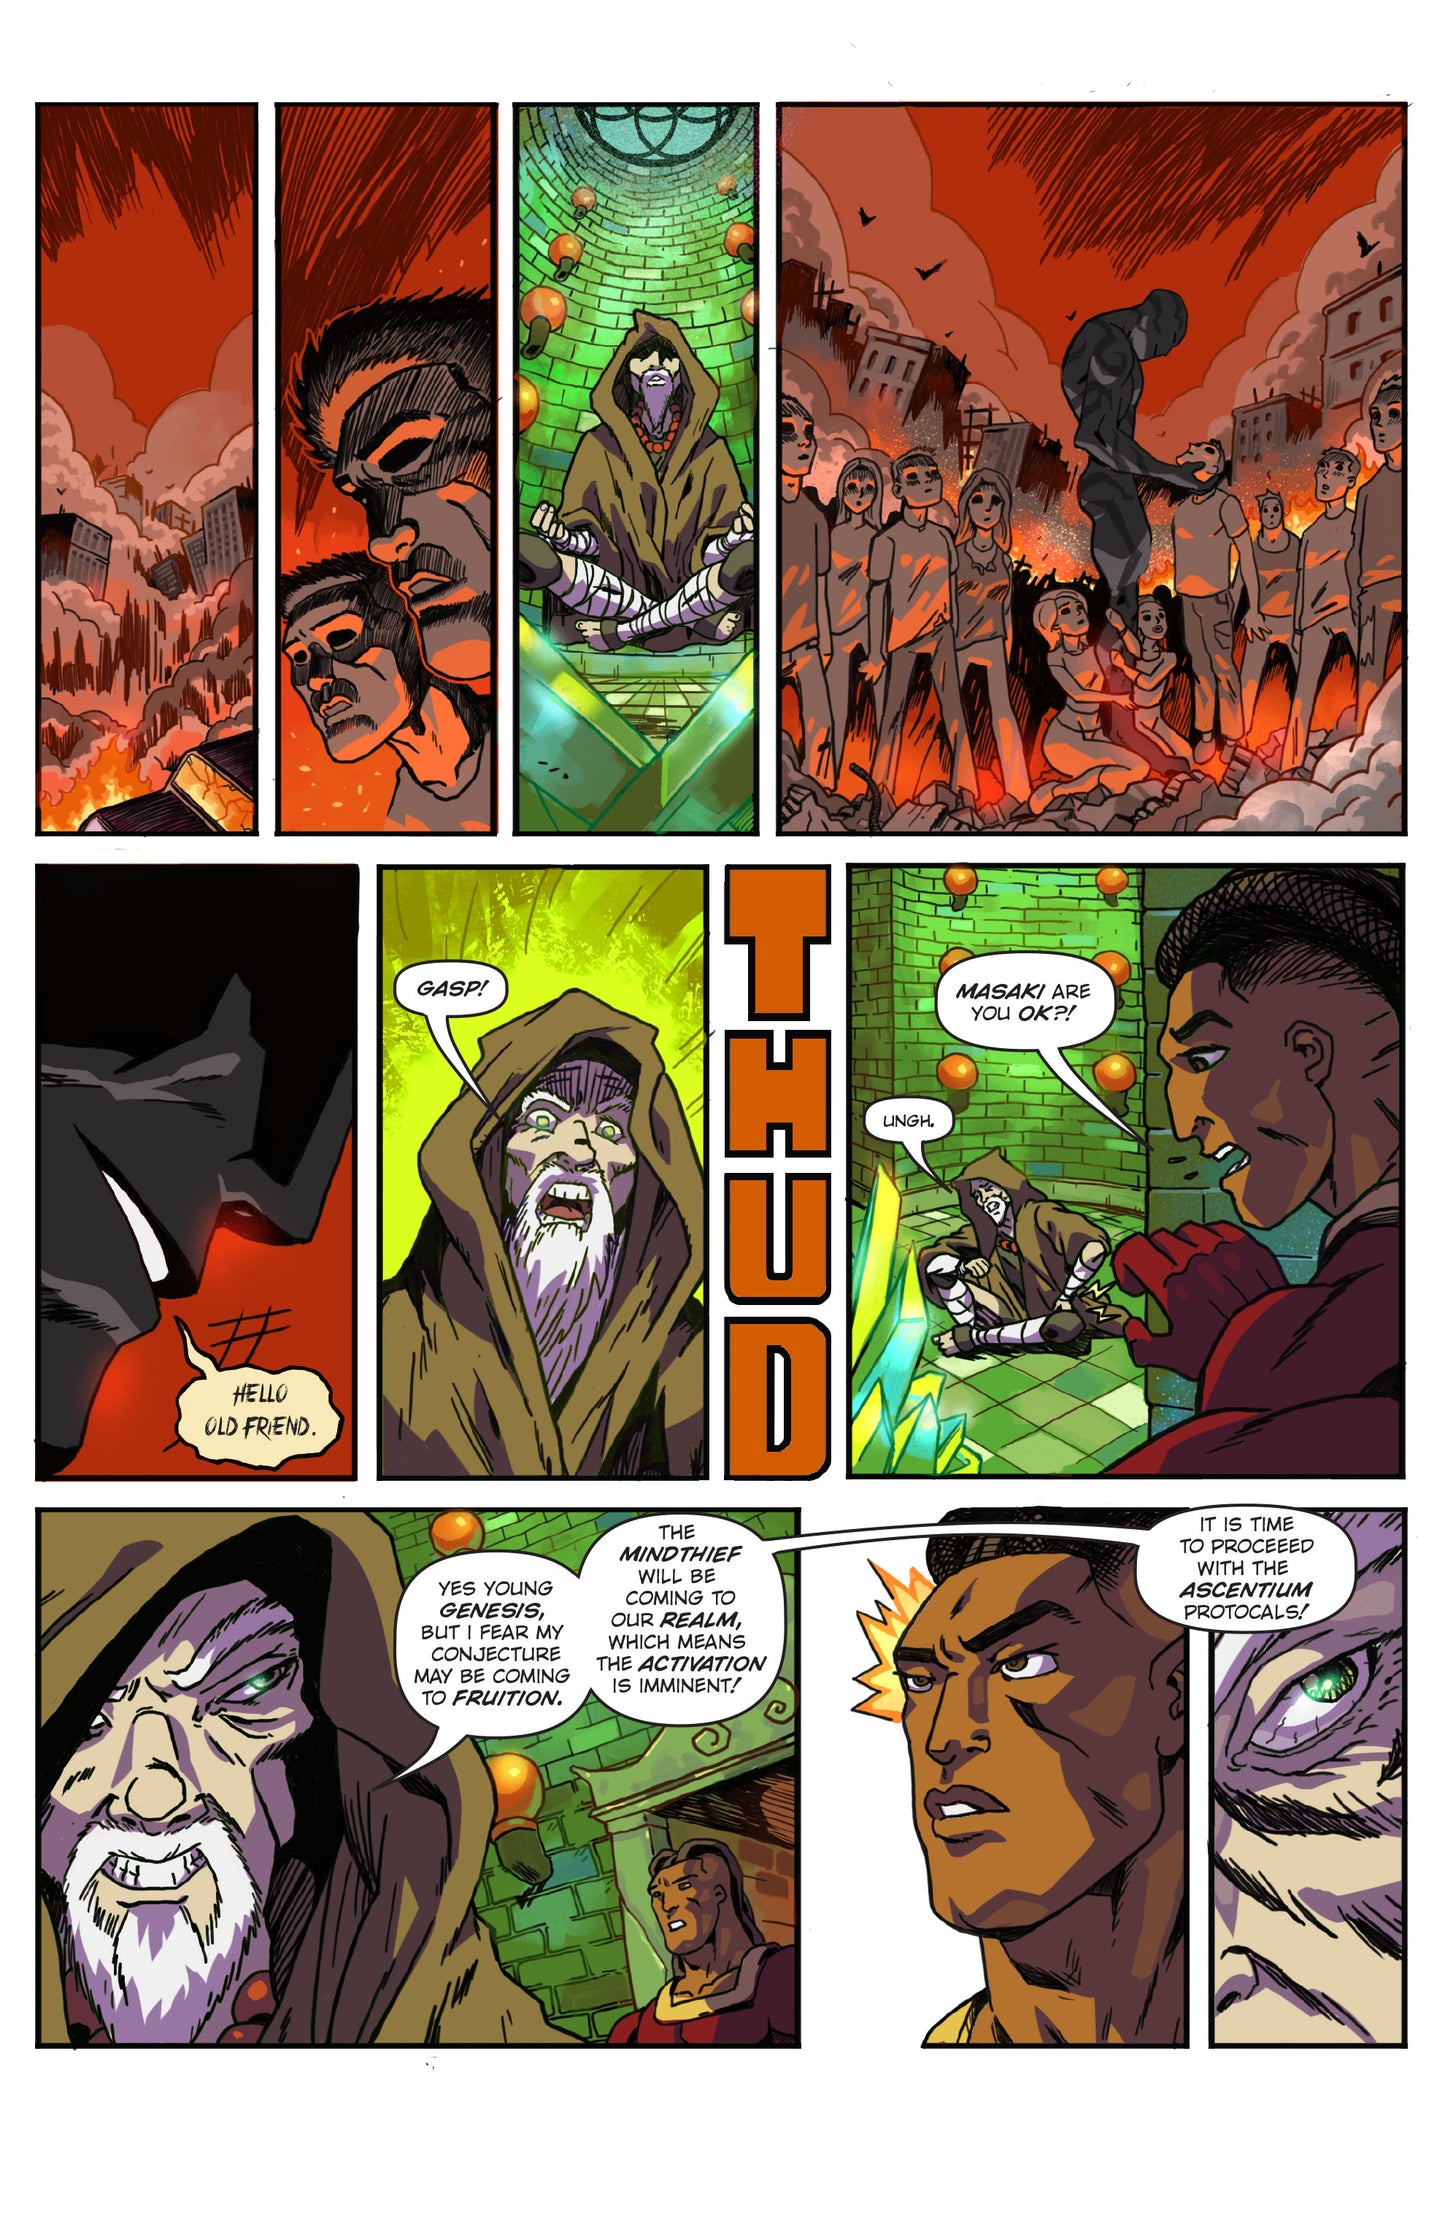 Beast Dominion : Genesis #1 (Comic Book)